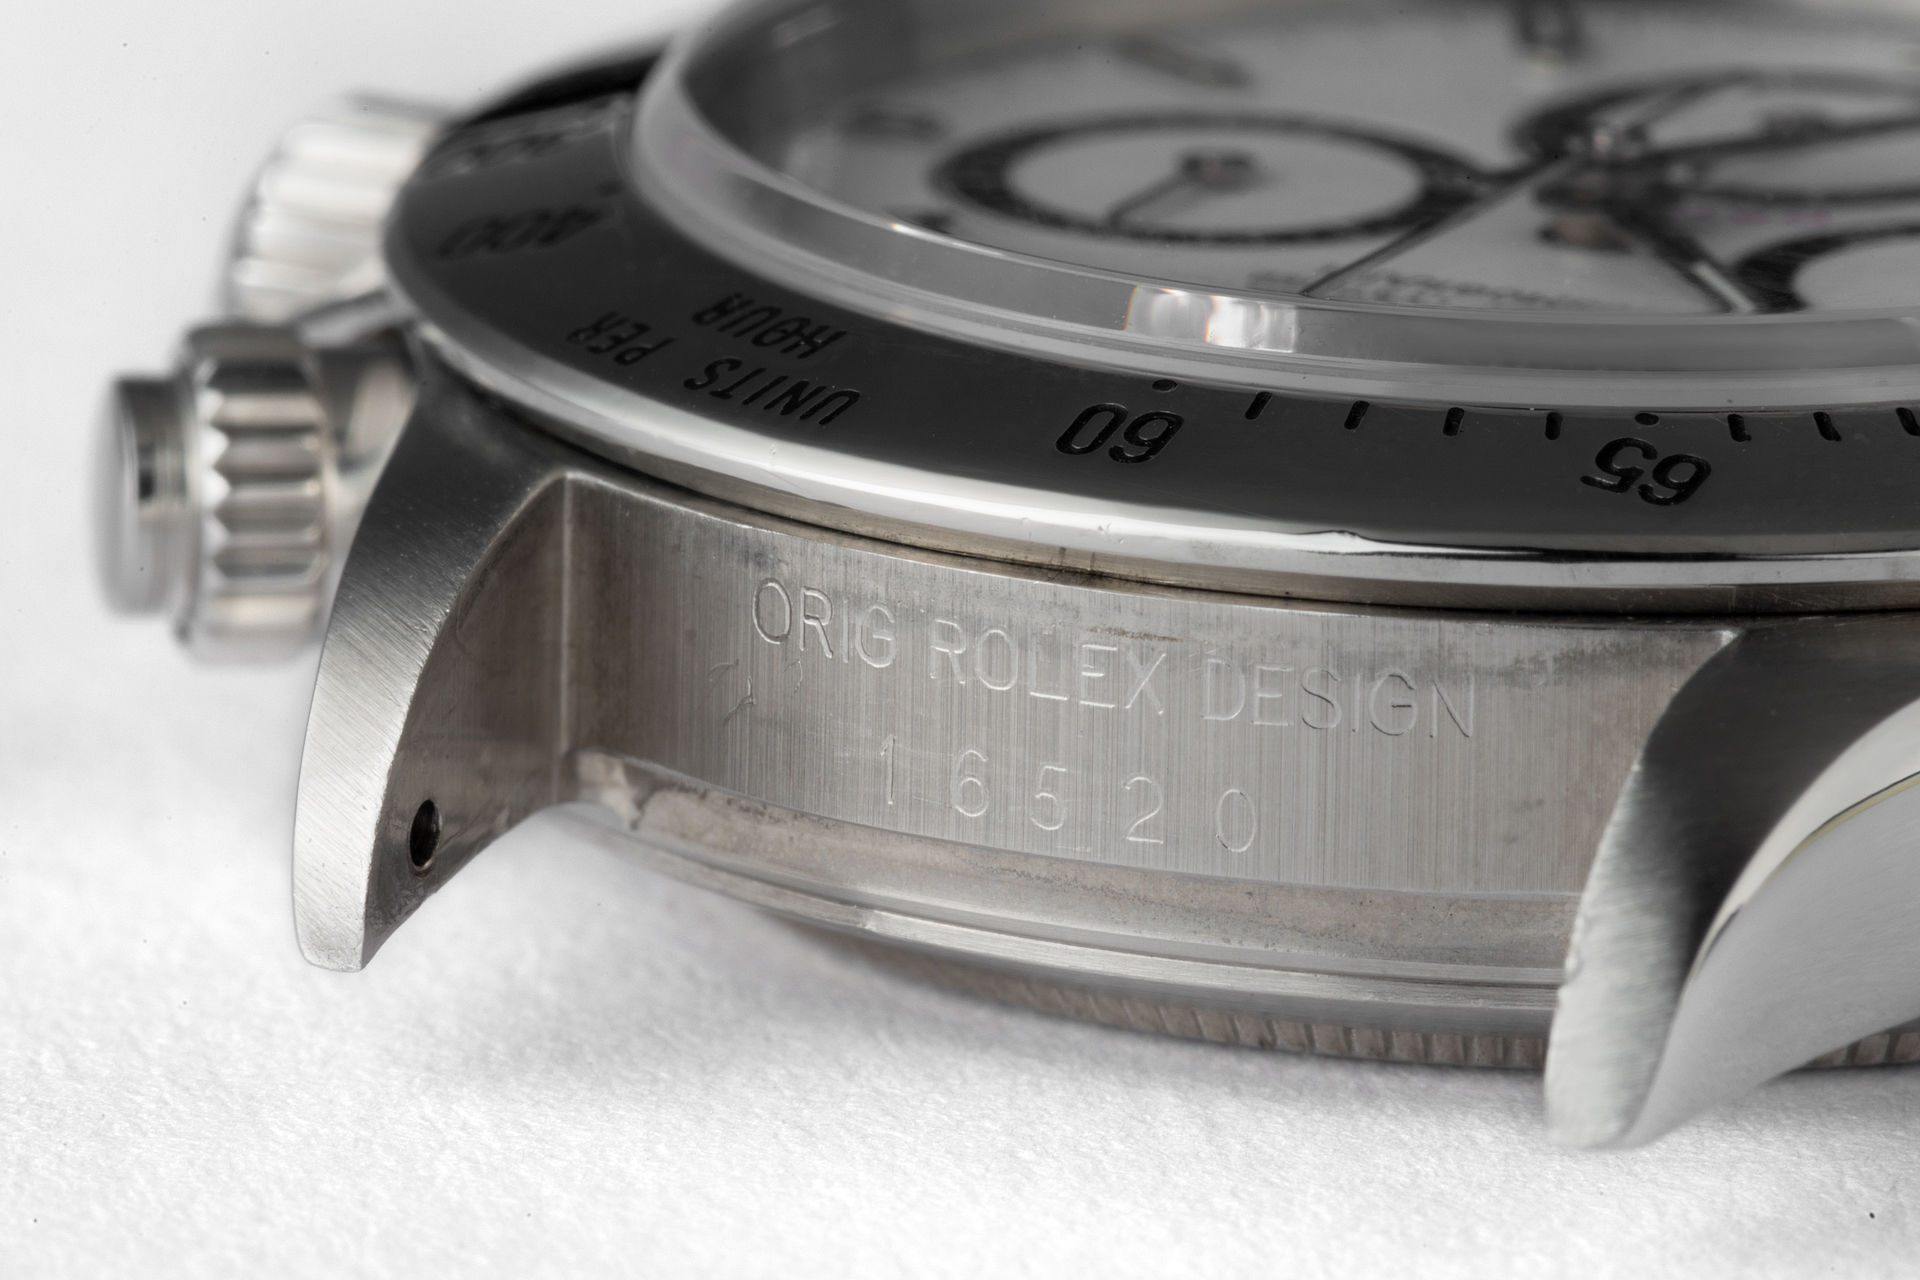 ref 16520 | Upside Down Six | Rolex Cosmograph Daytona